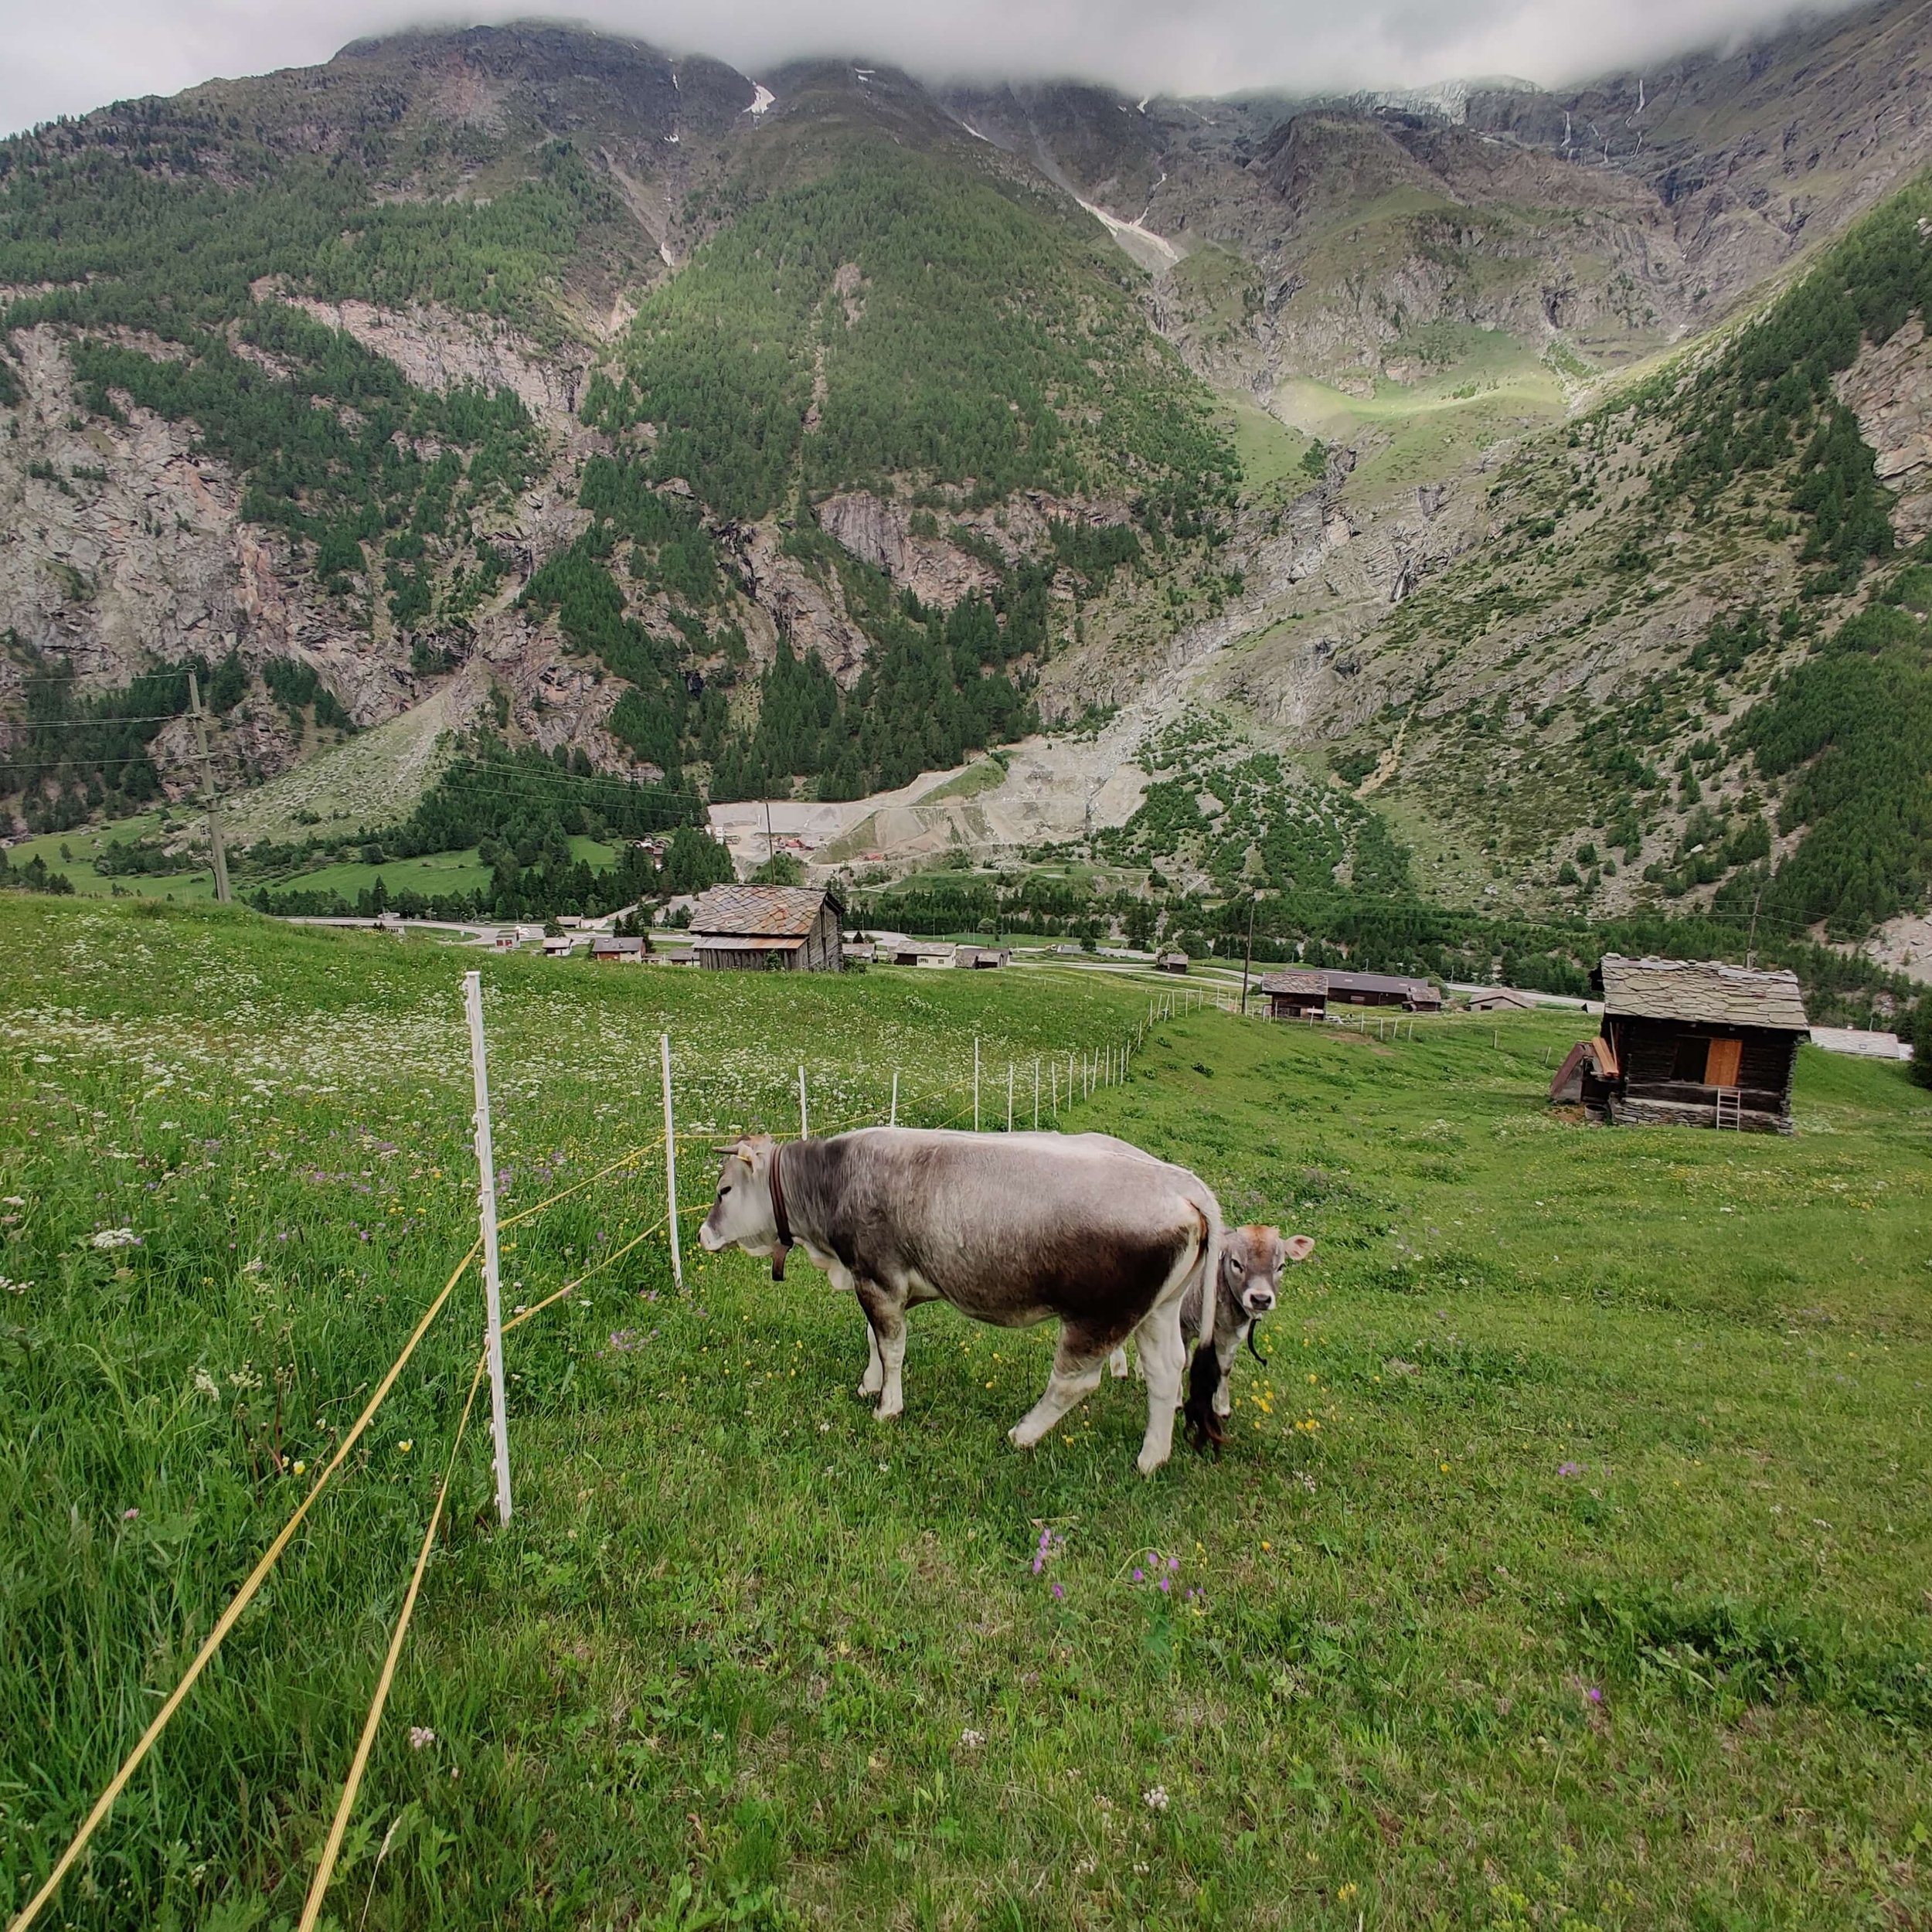 Curious cows at the edge of Randa